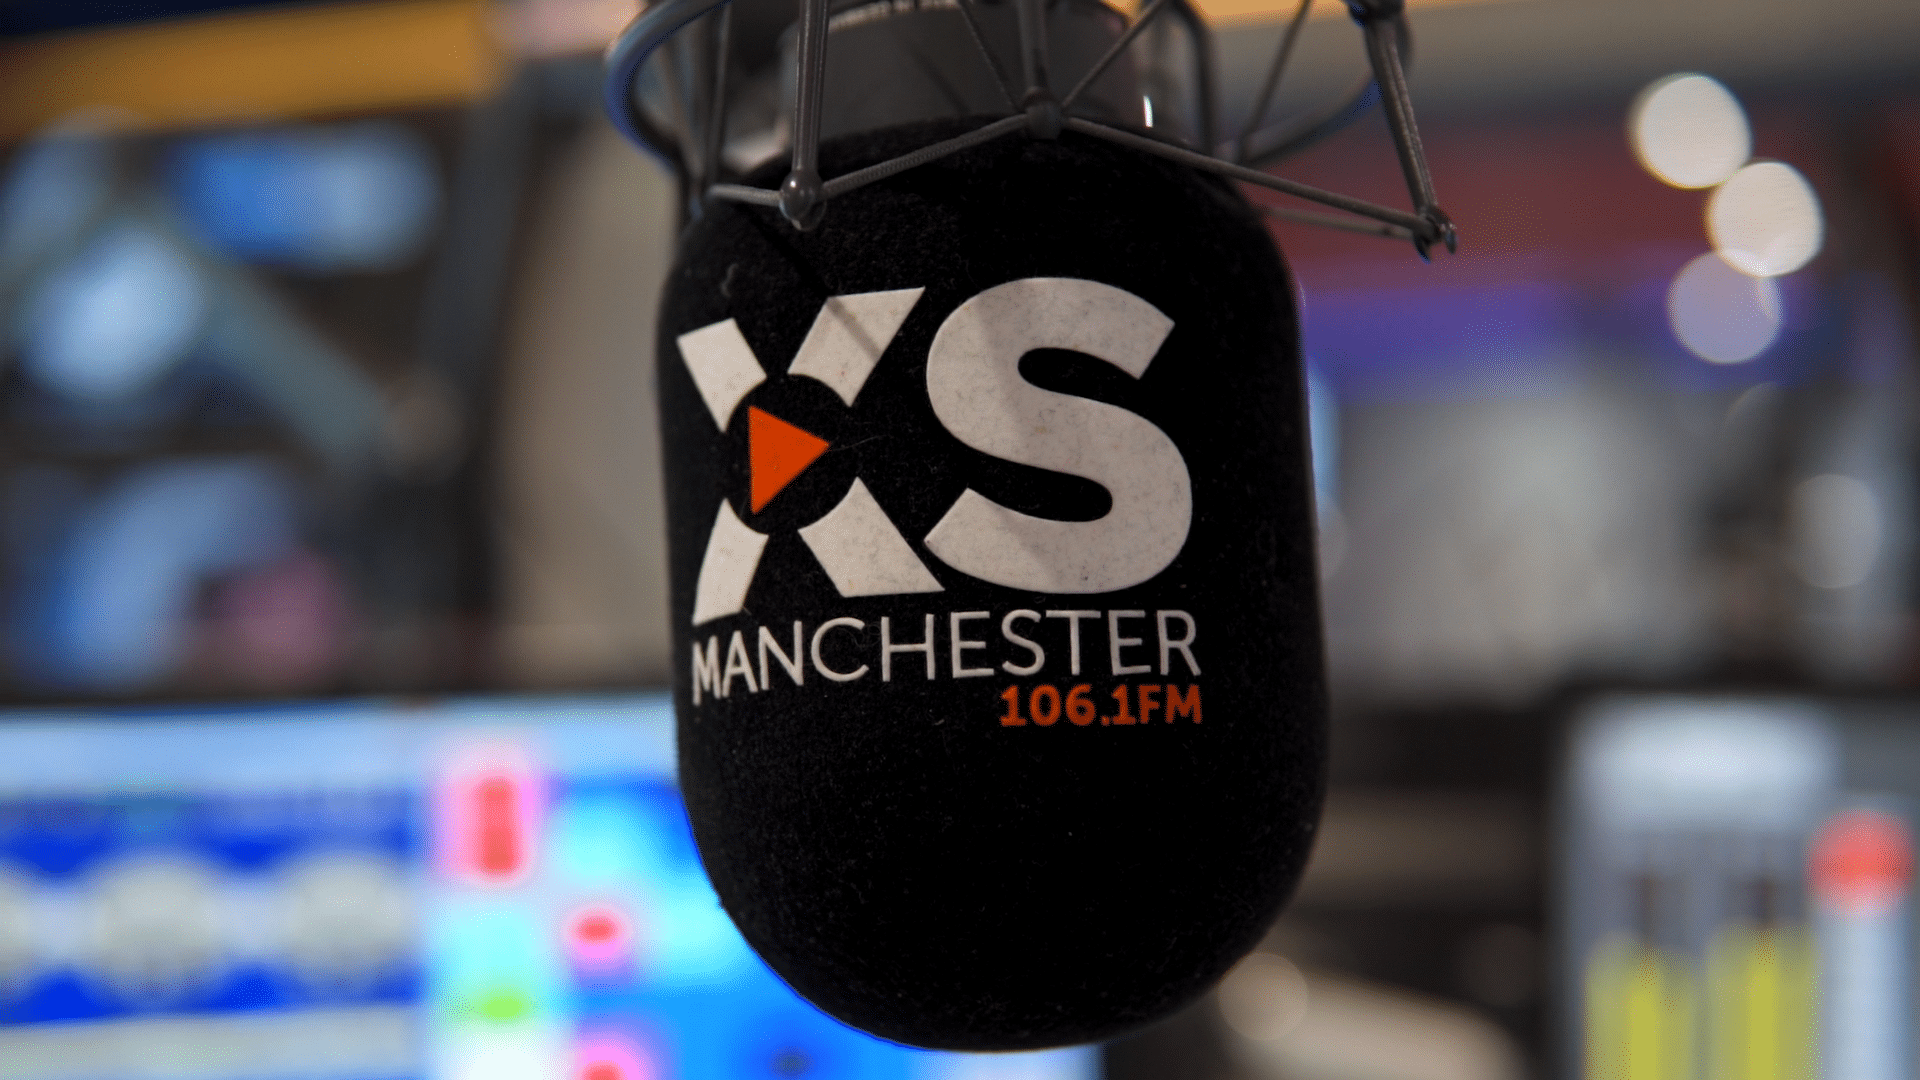 XS Manchester Studio Microphone 2